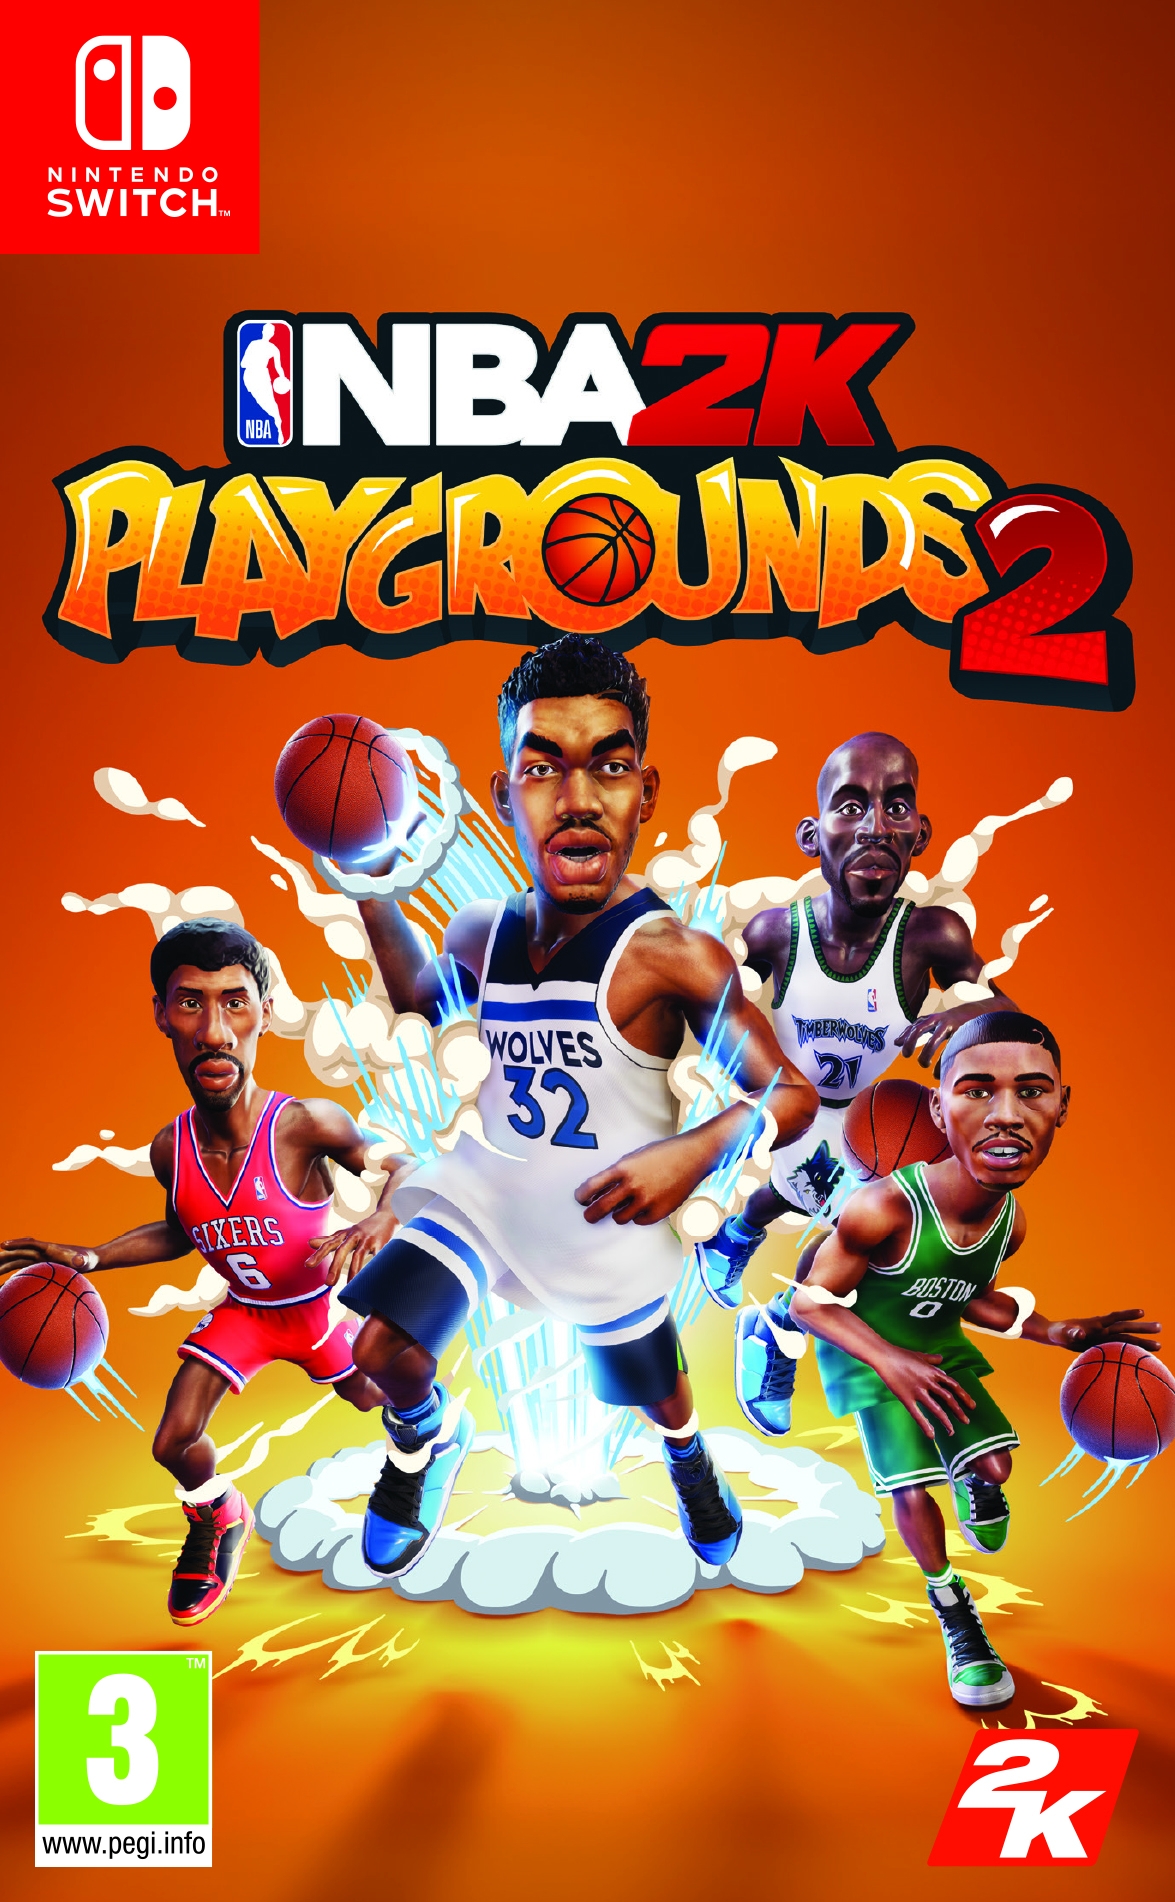 Switch NBA 2K Playgrounds 2